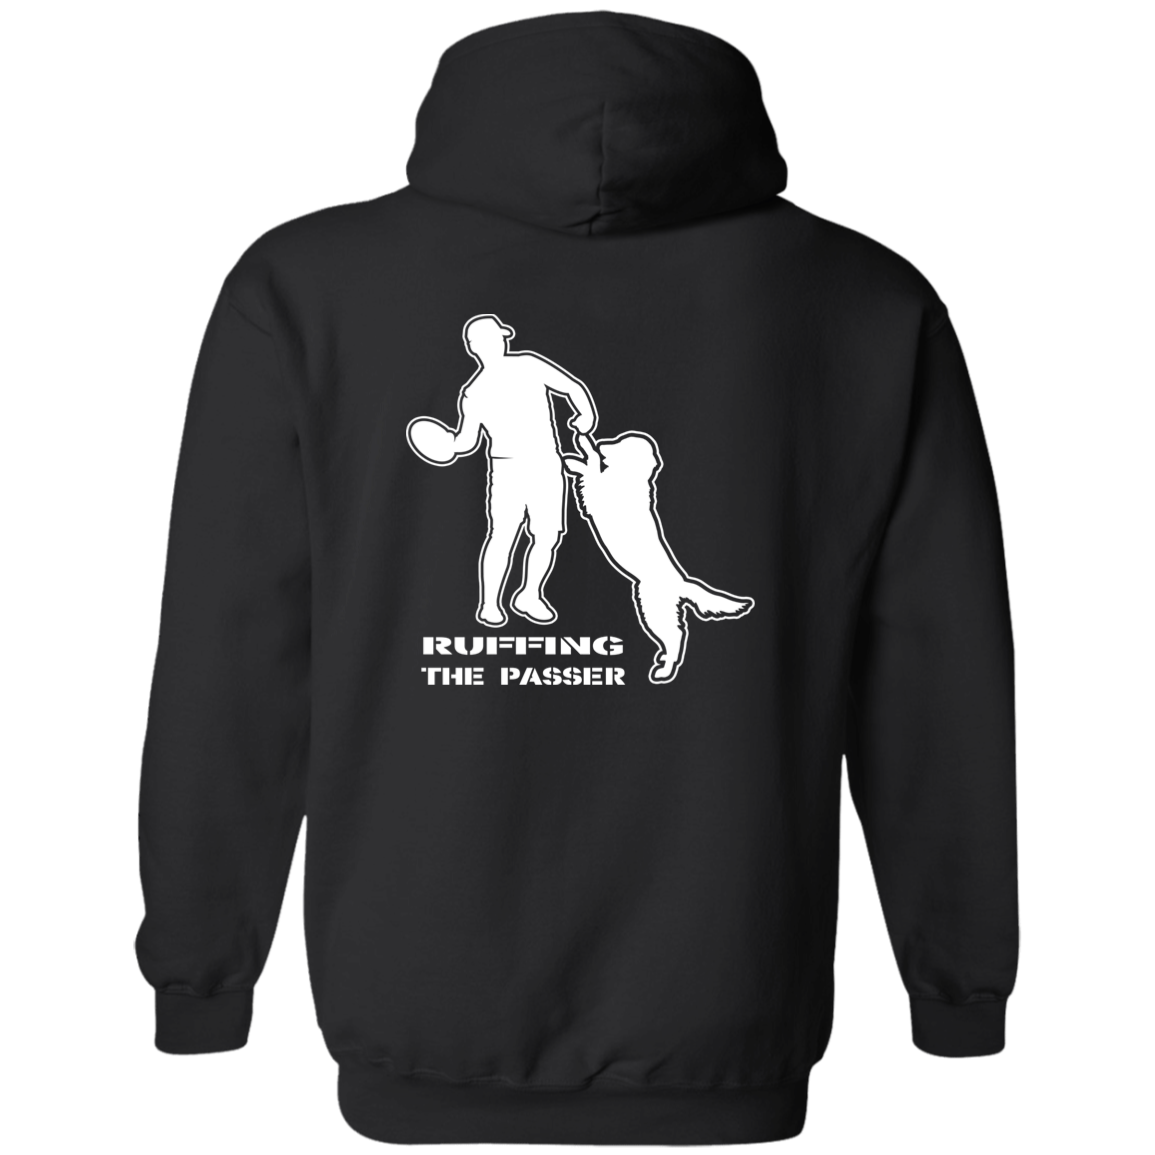 ArtichokeUSA Custom Design. Ruffing the Passer. Golden Lab Edition. Zip Up Hooded Sweatshirt